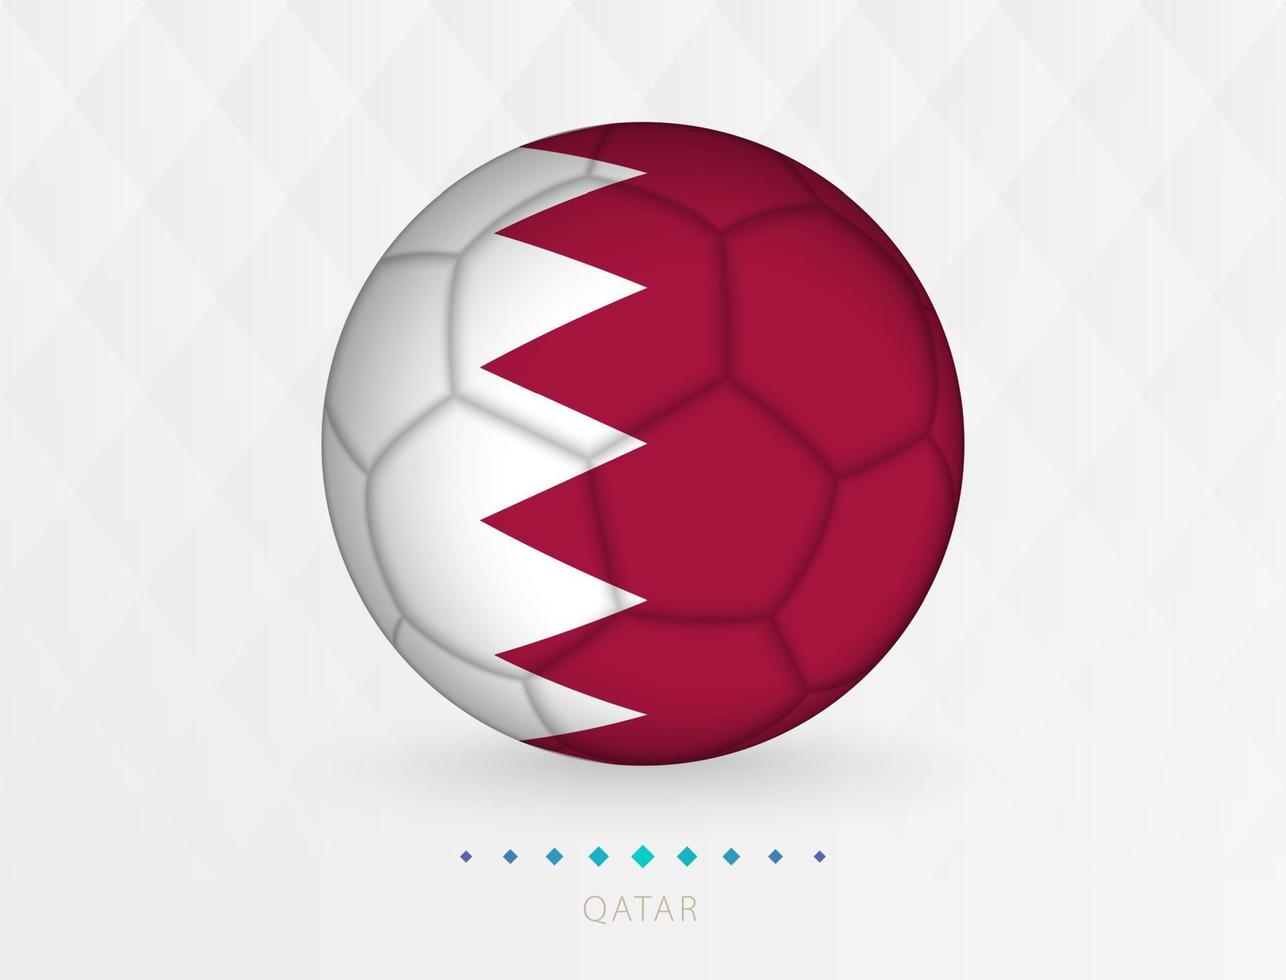 Football ball with Qatar flag pattern, soccer ball with flag of Qatar national team. vector